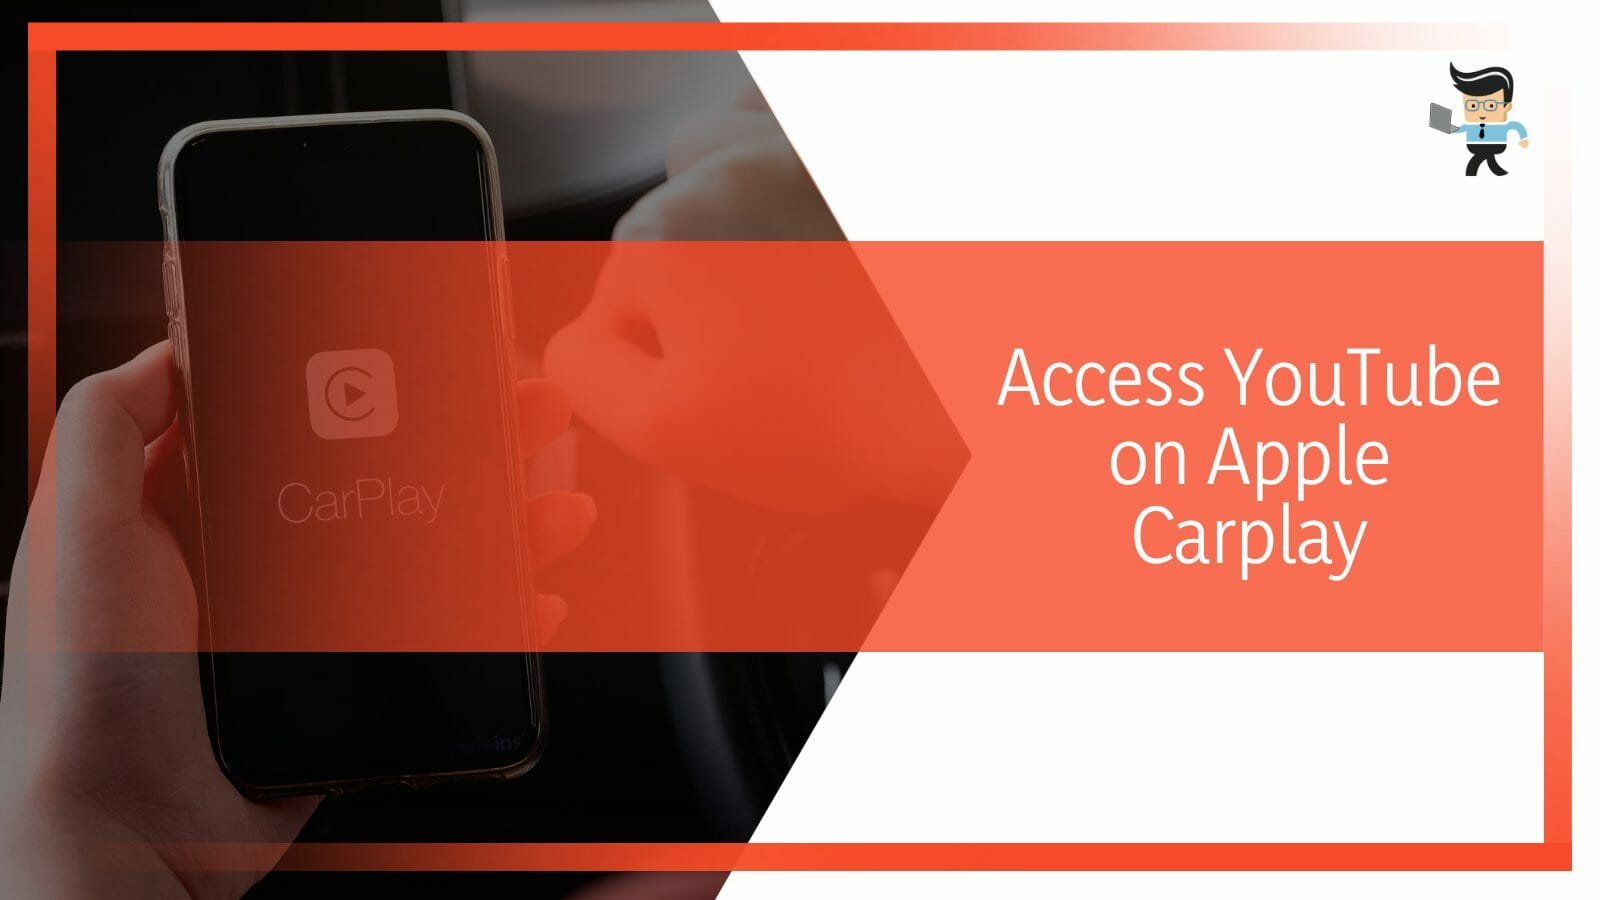 Access YouTube on Apple Carplay